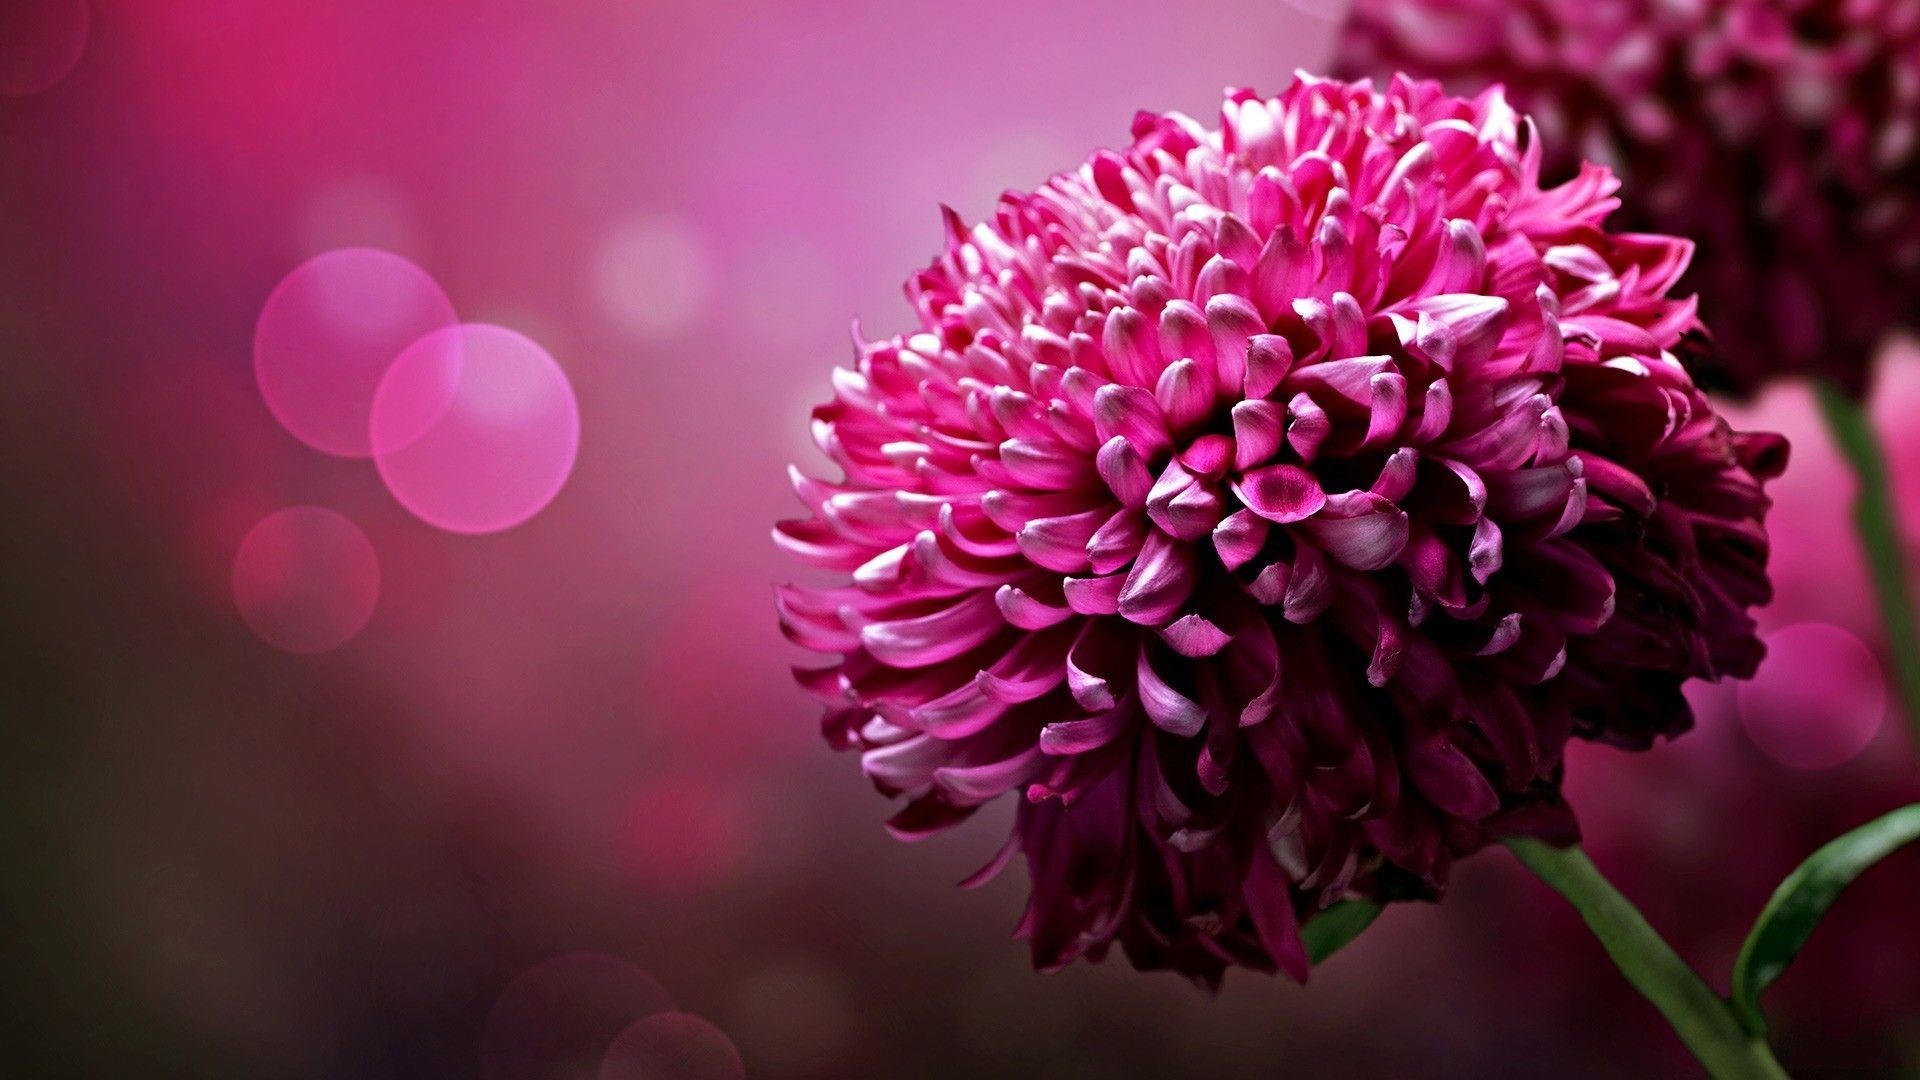 1920x1080 Flower Wallpaper HD For Desktop Free Download: Image Source Â· Image Source